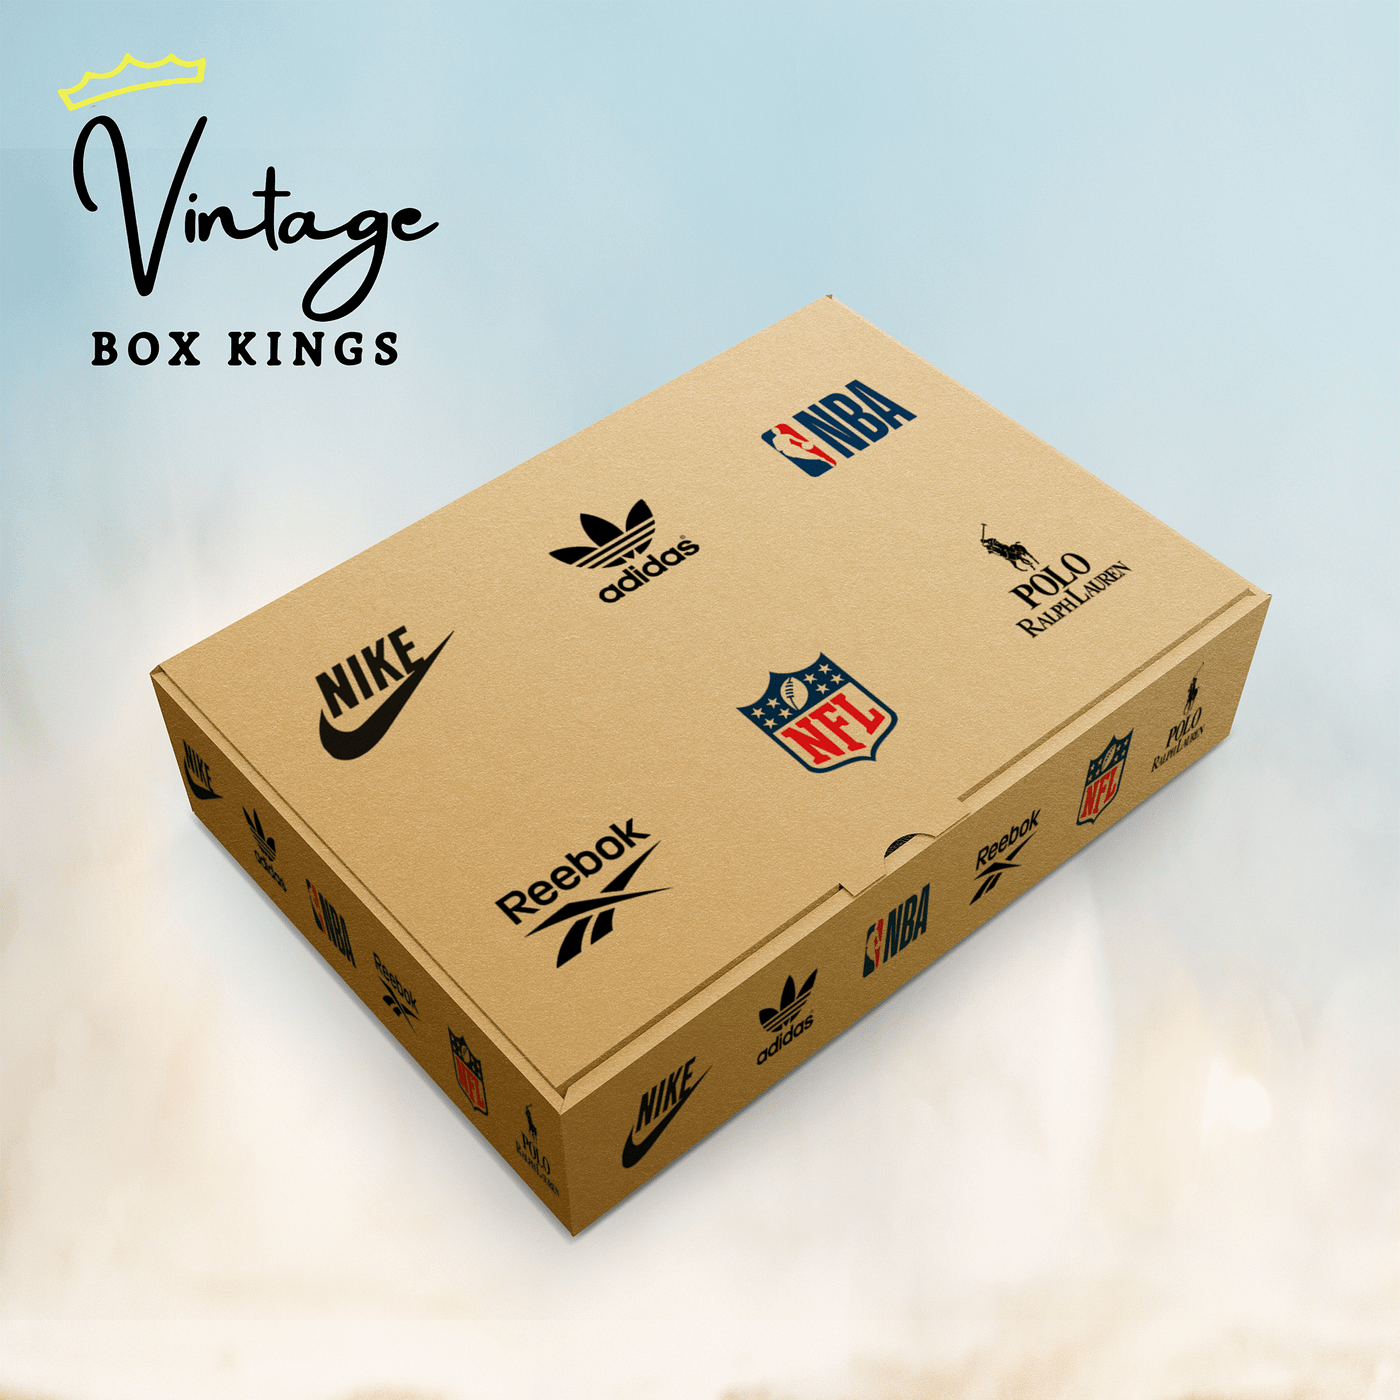 5 PIECE T-SHIRT MYSTERY BOX - Vintageboxkings - Medium